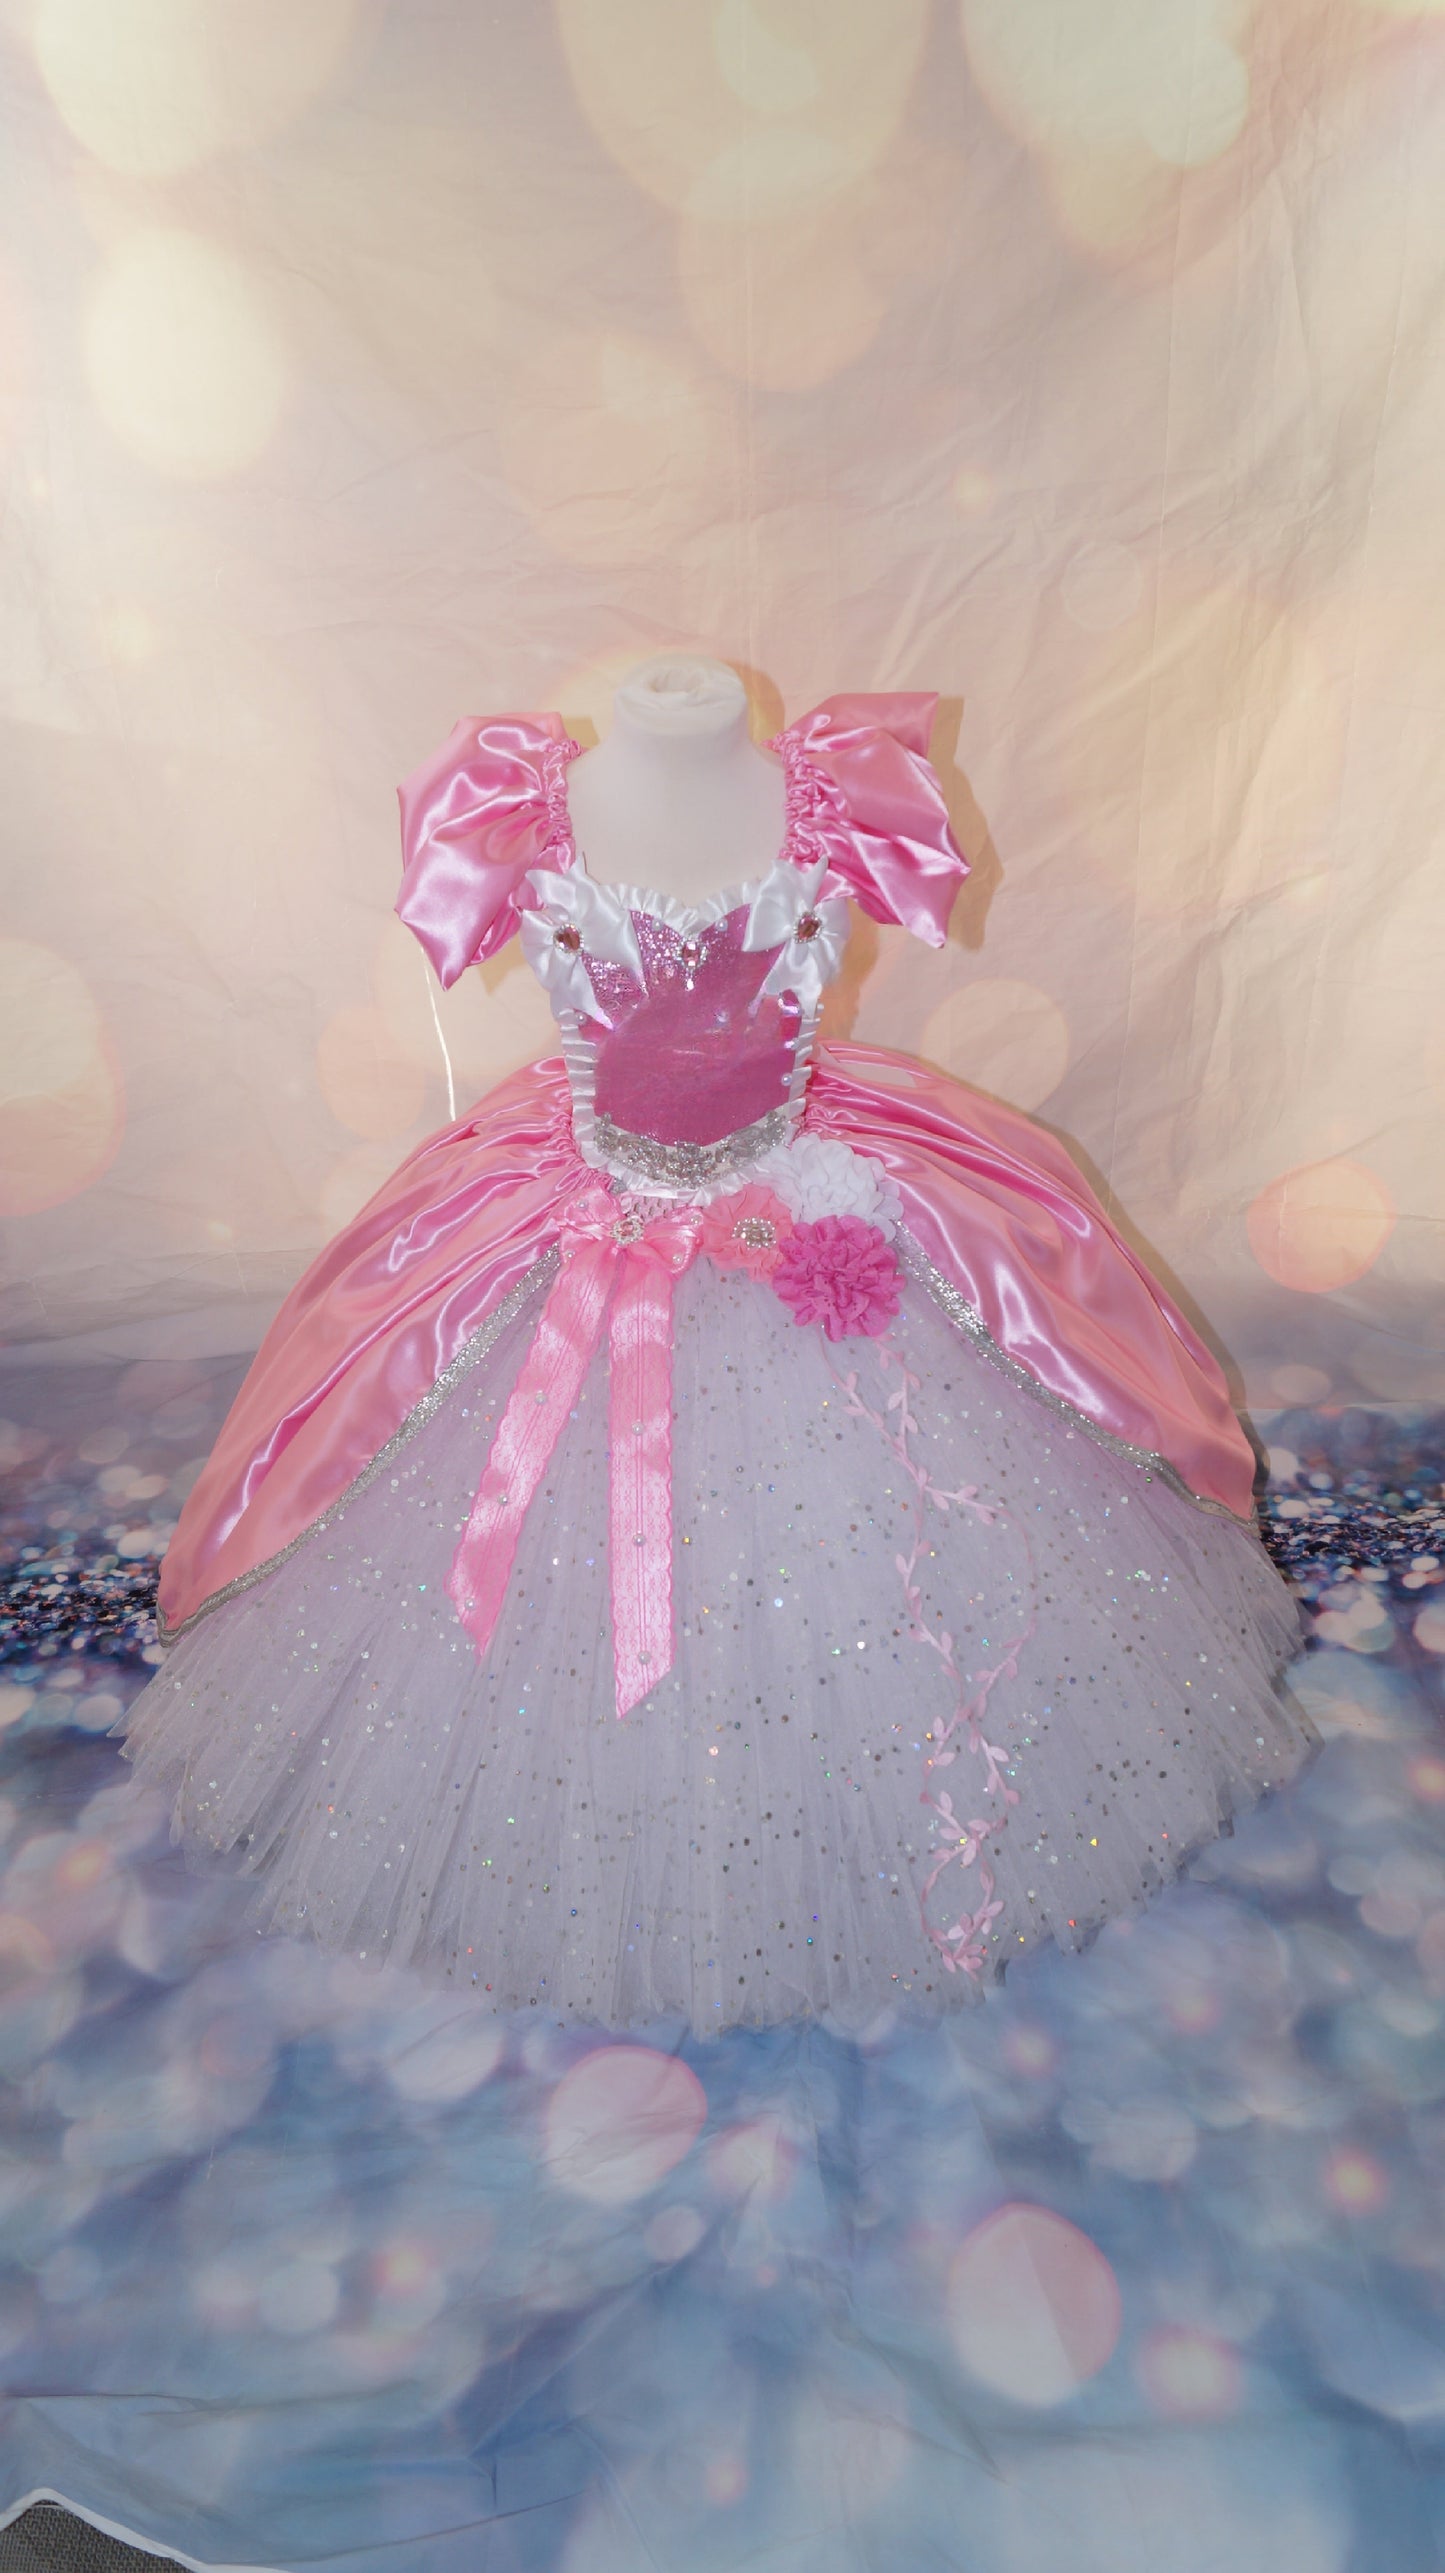 Disney Princess Ariel The Little Mermaid Pink Ballgown Tutu Dress